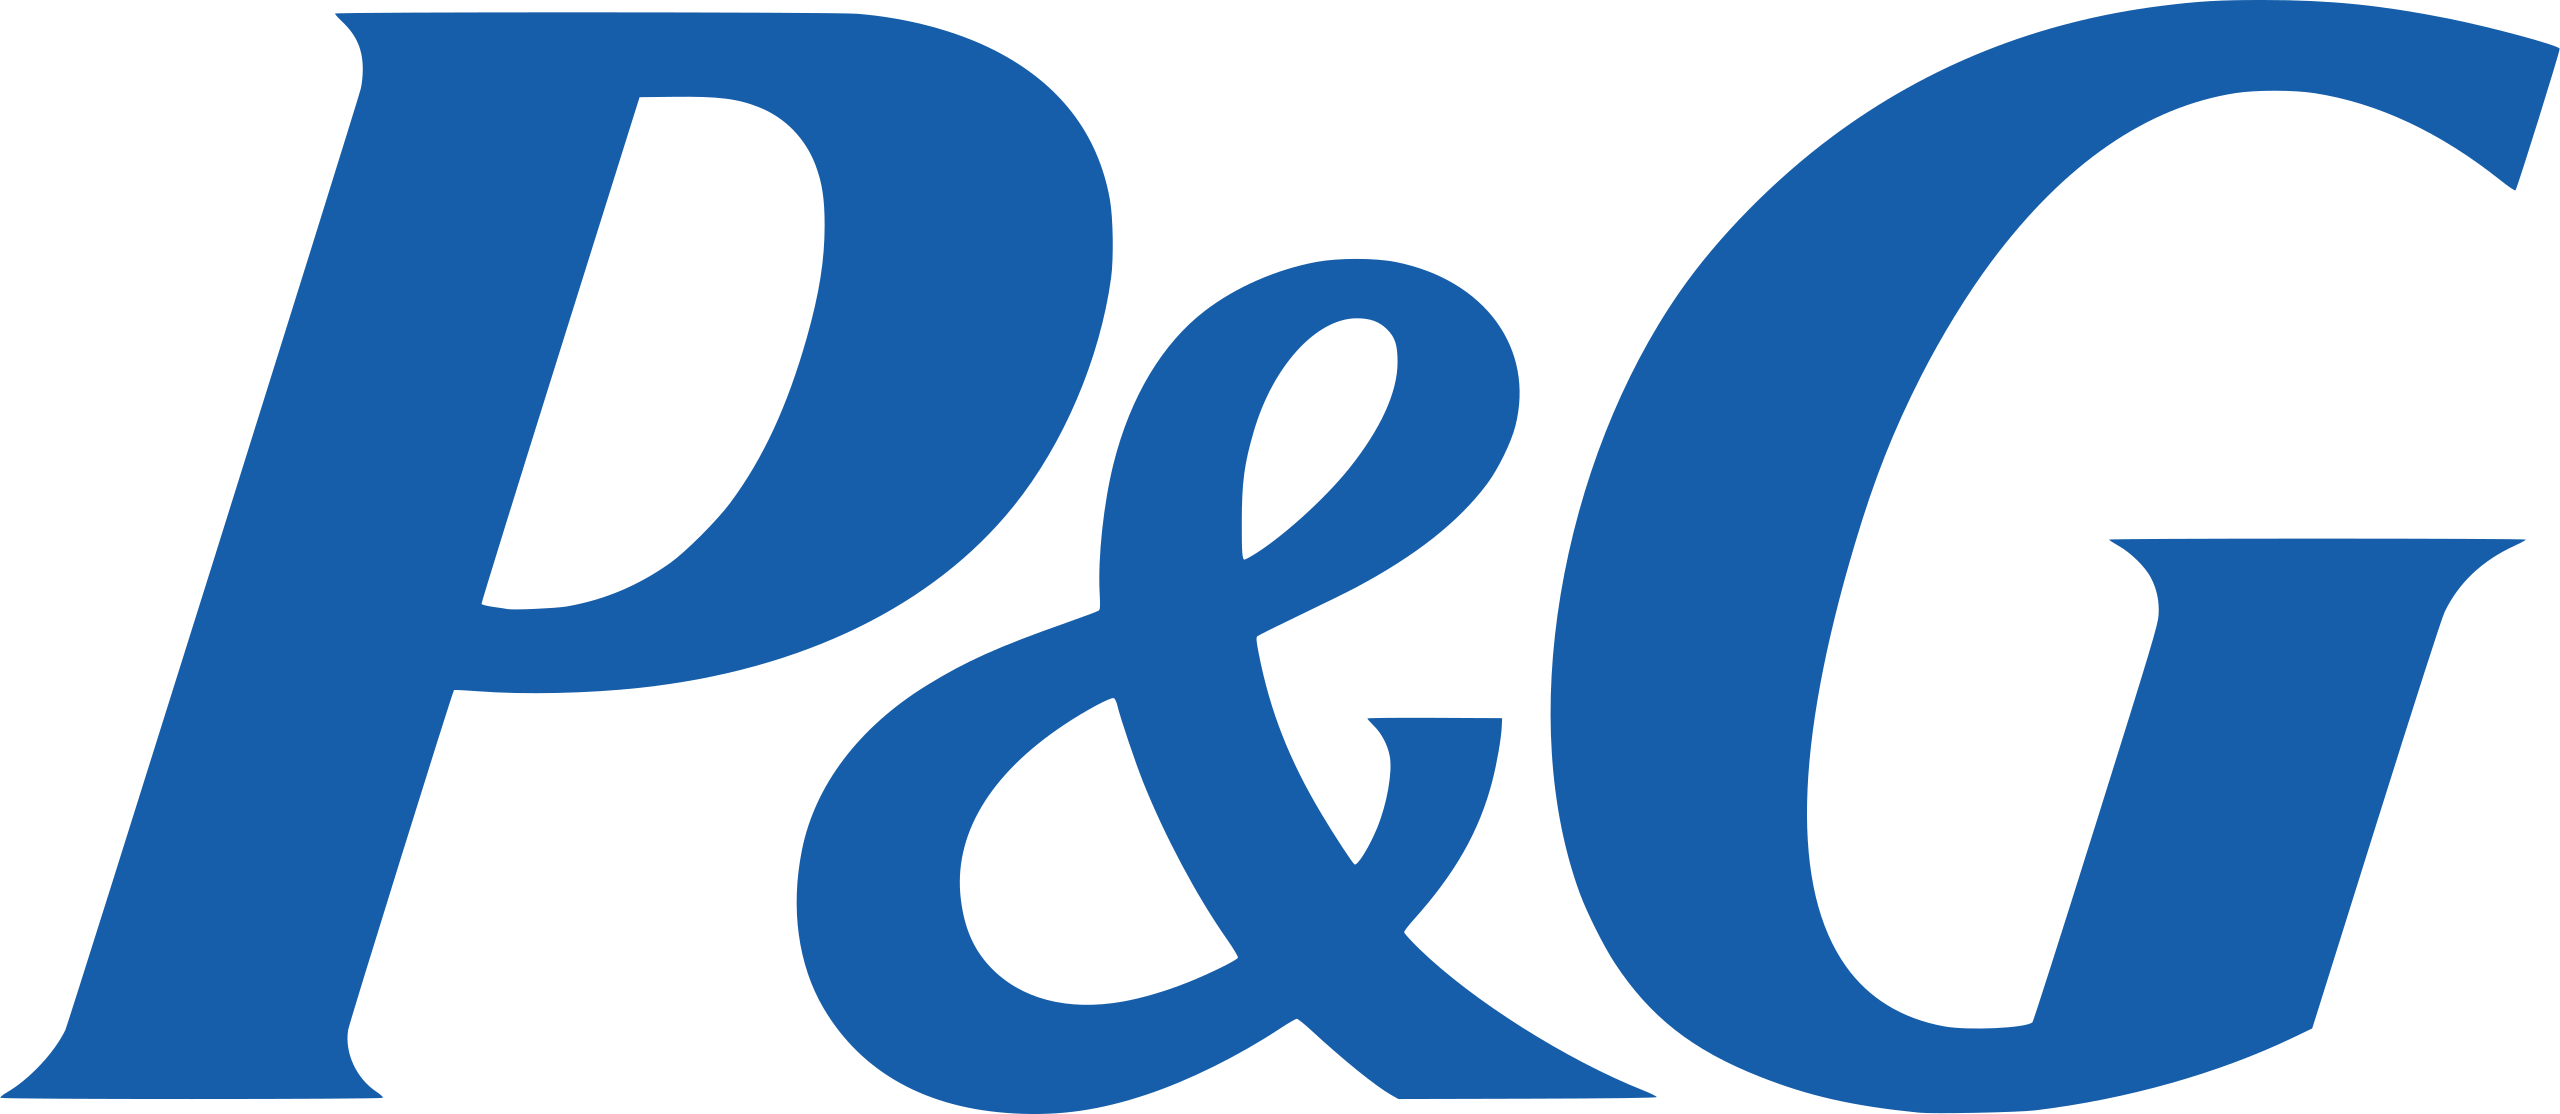 Proctor & Gamble logo (color)